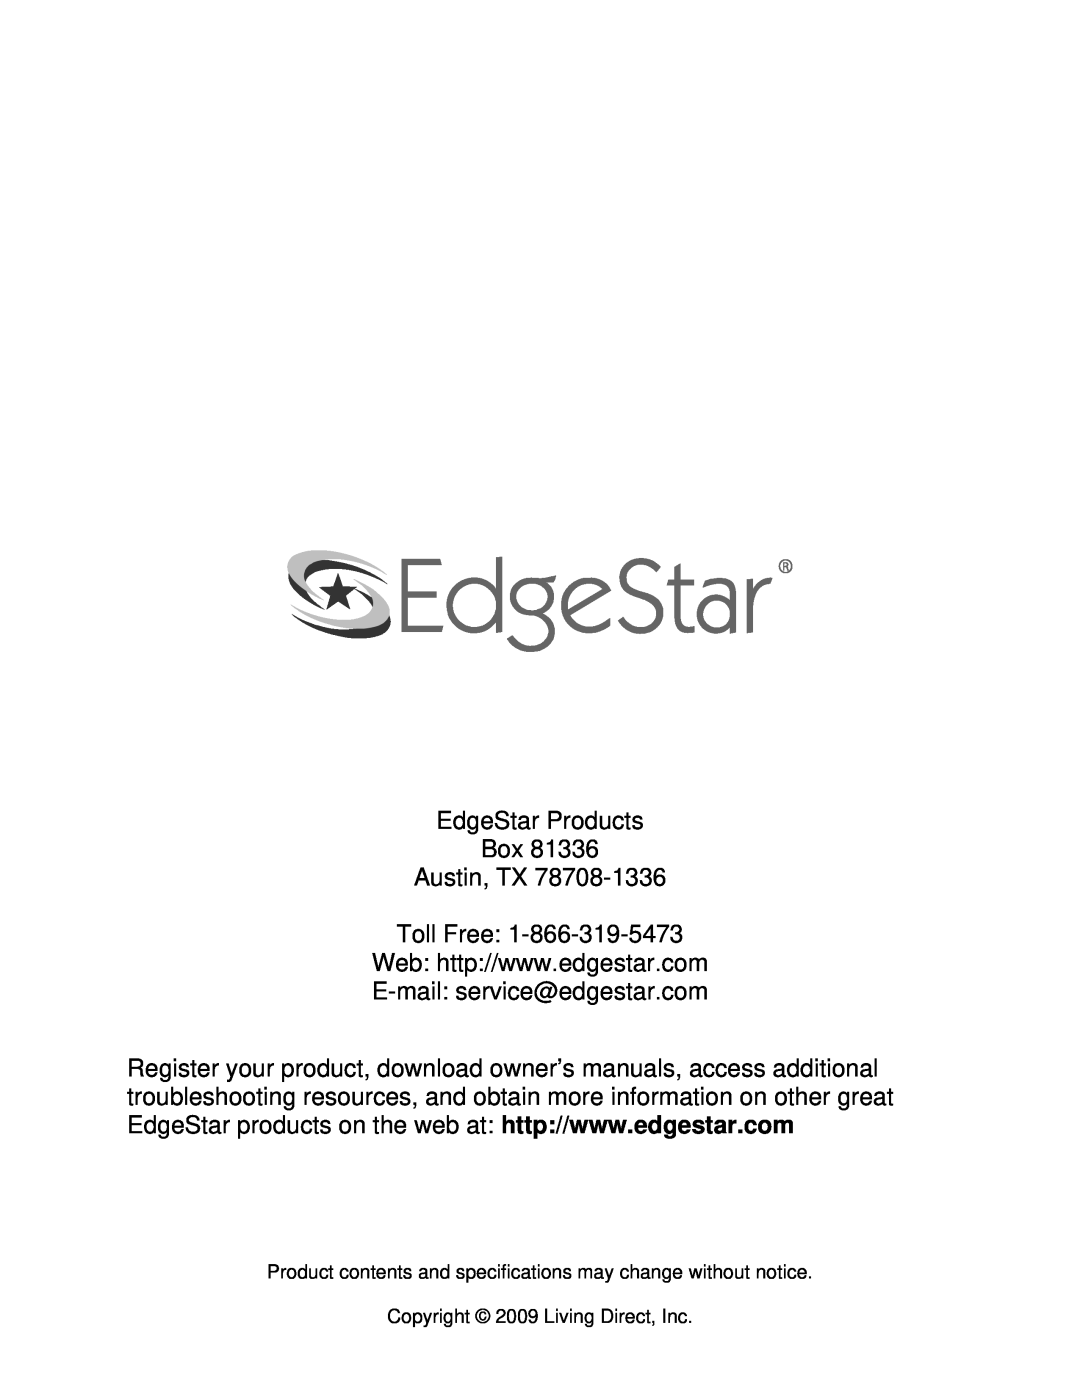 EdgeStar AP12000HS owner manual EdgeStar Products Box Austin, TX Toll Free, Copyright 2009 Living Direct, Inc 